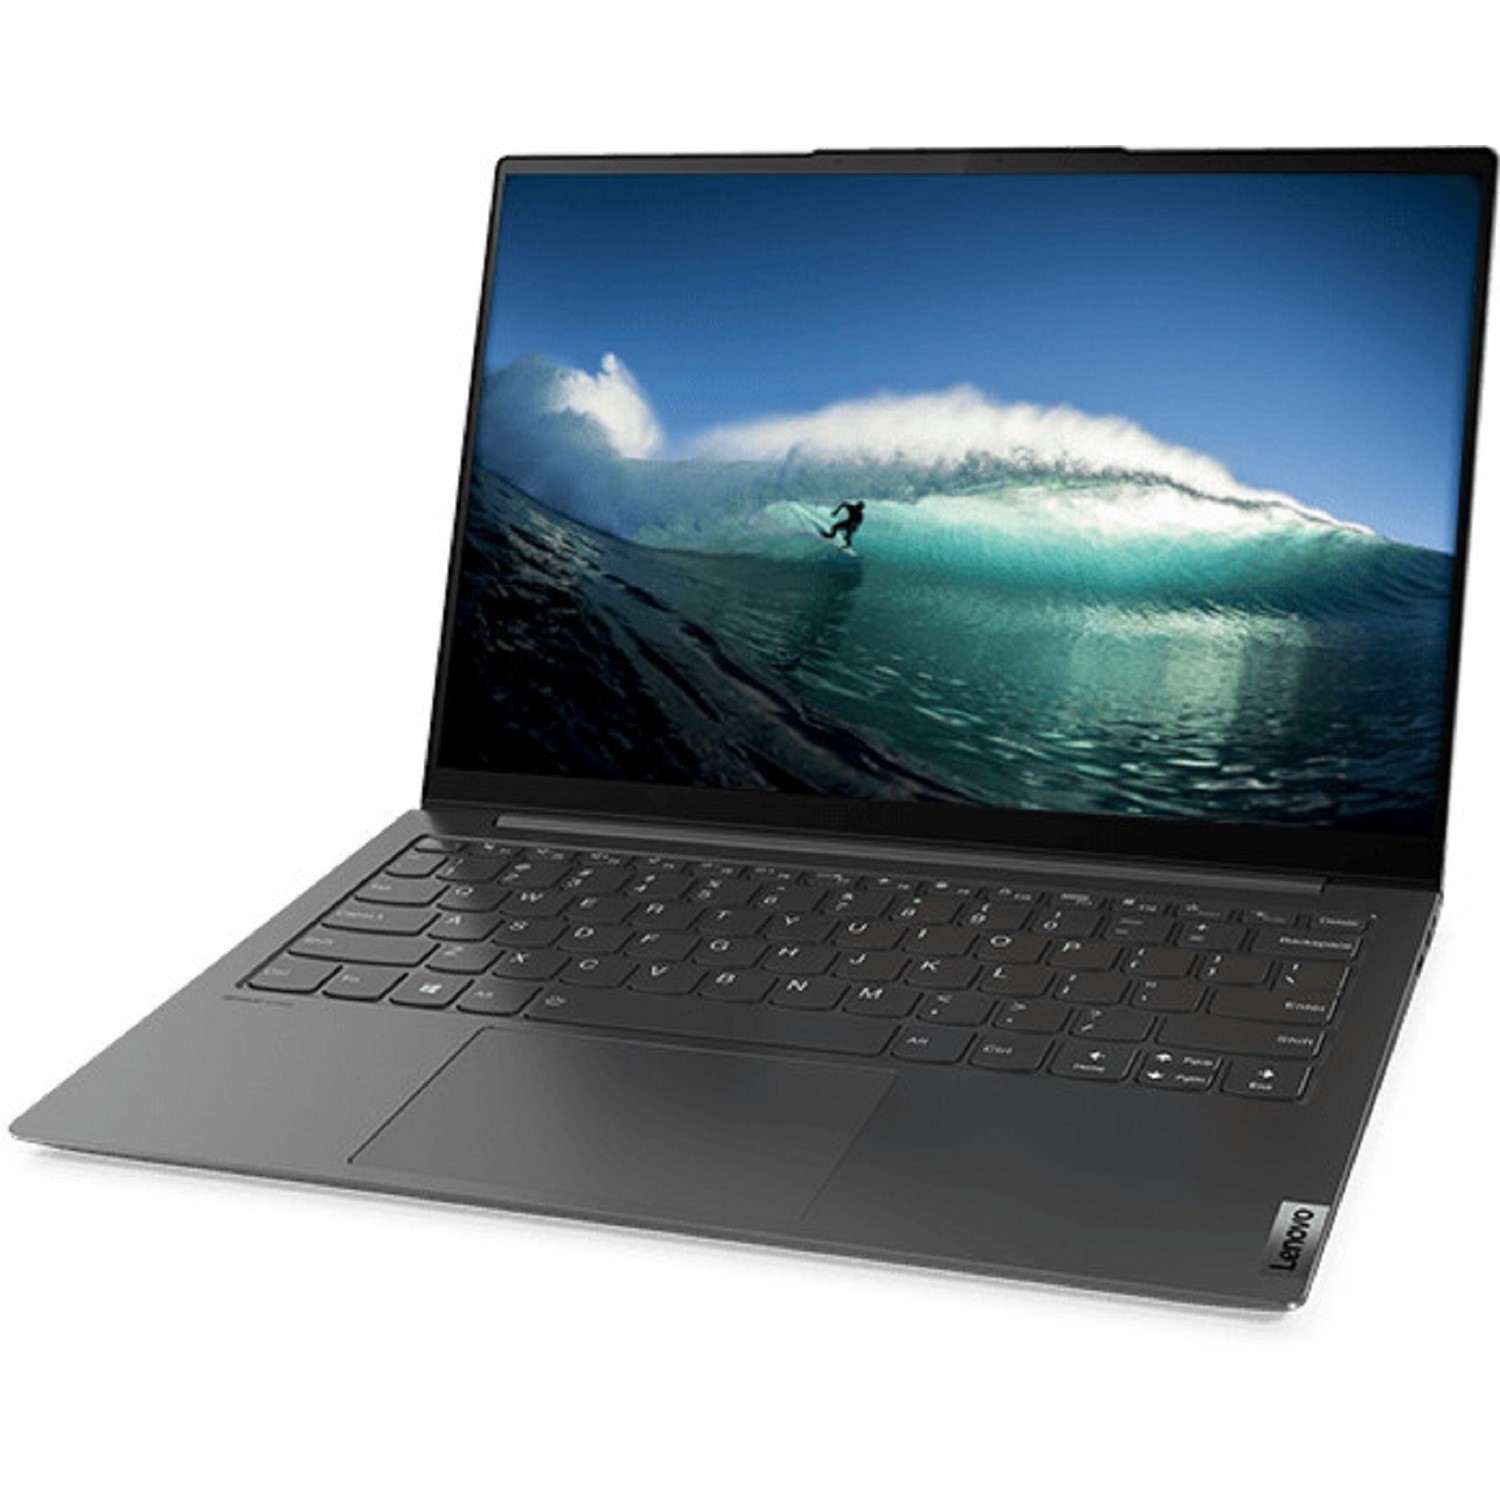 Lenovo Yoga Slim 7i Core i7-1165G7 8GB 512GB  Inch Windows 10 Home  Laptop on Servers Direct